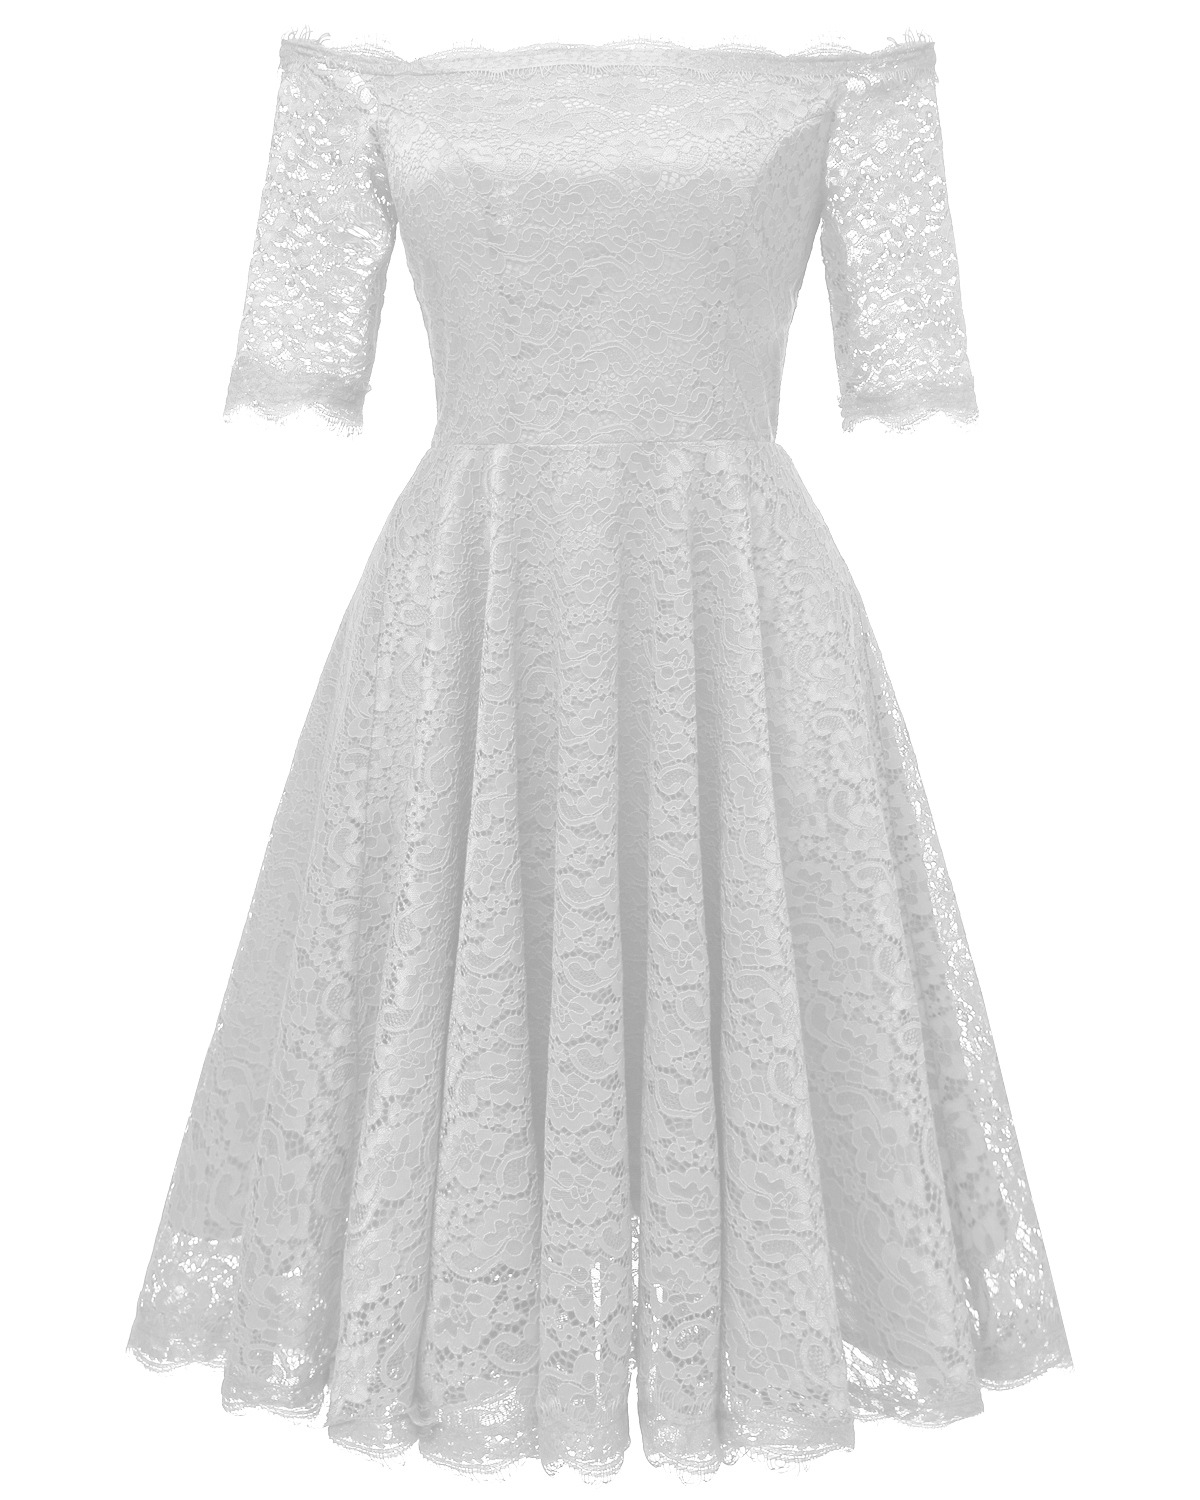 Fashion Off Shoulder Half Sleeve Floral Lace Dress Party Dress - White